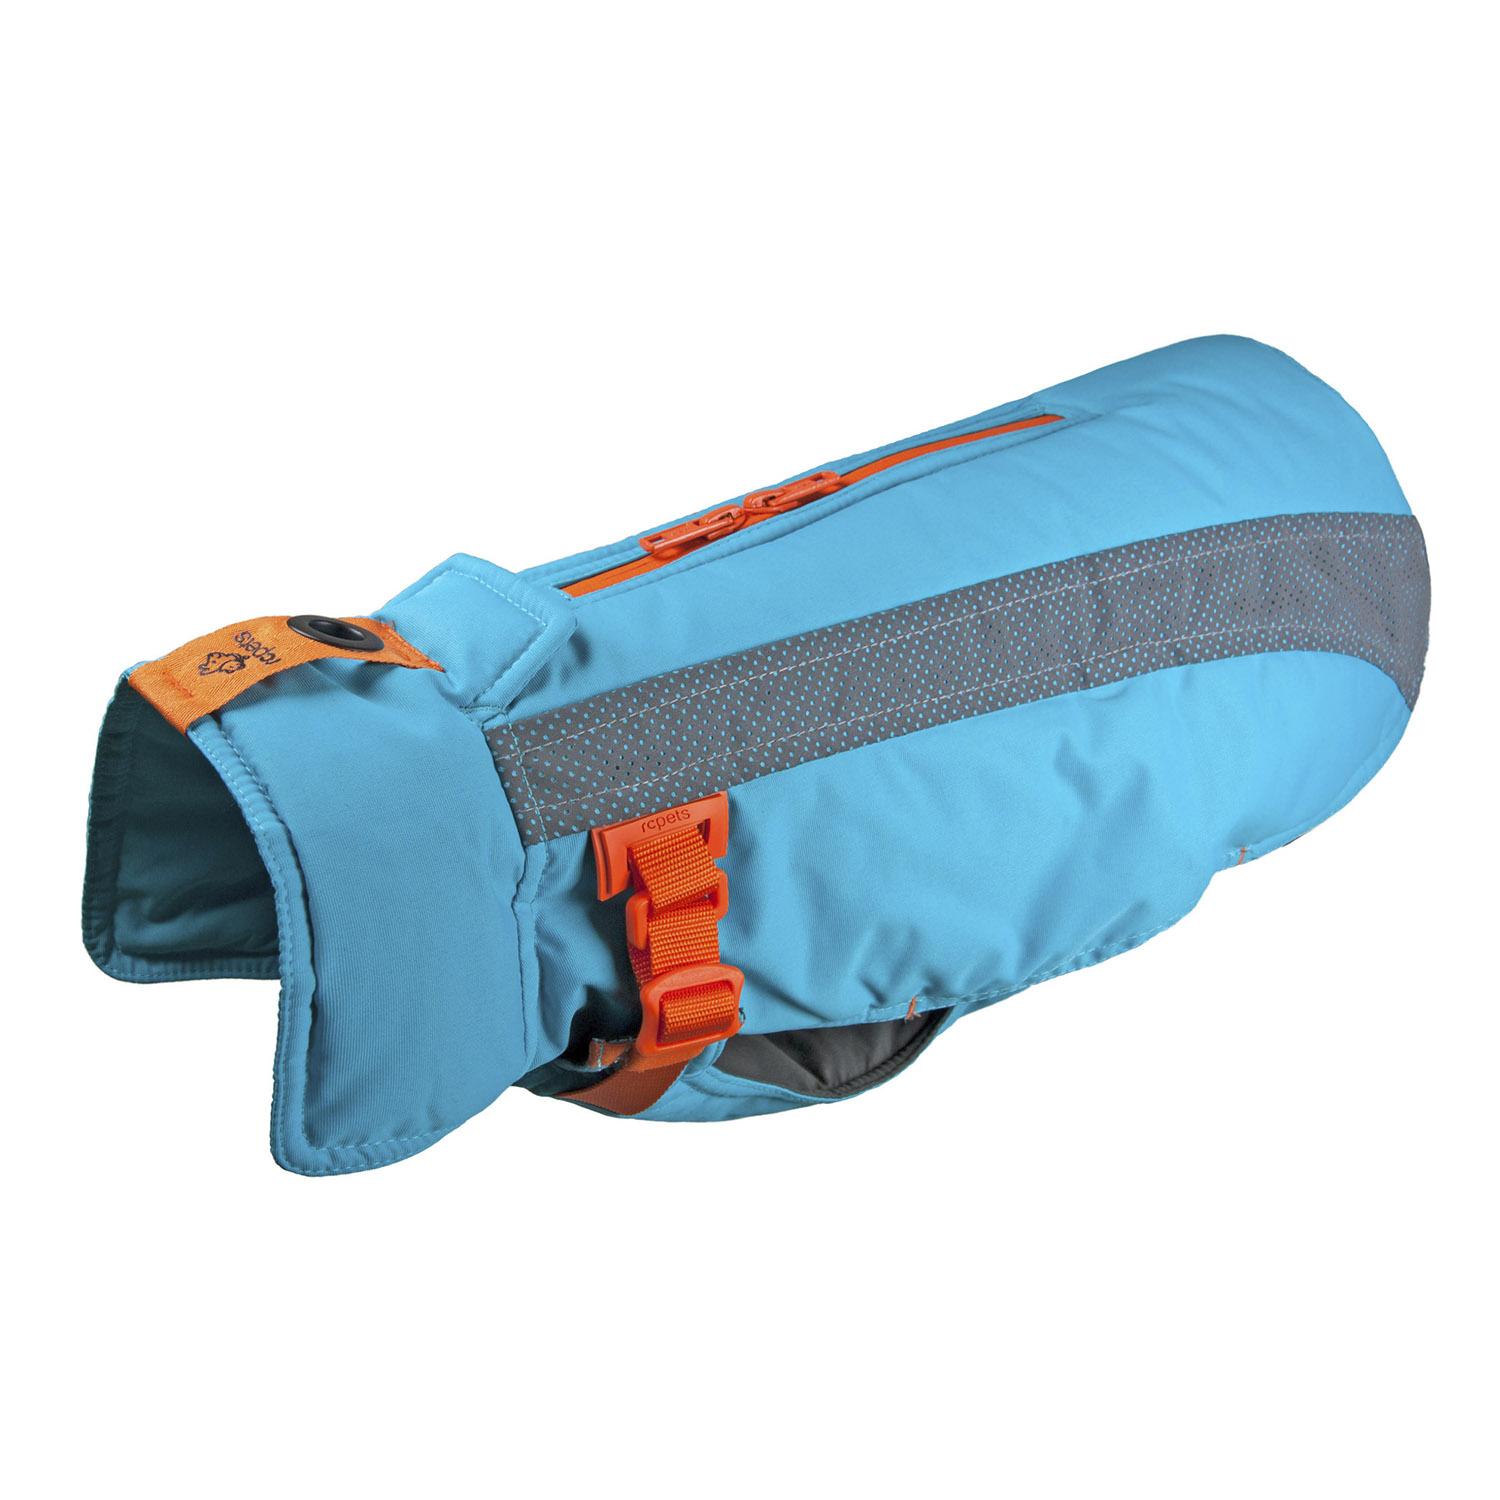 Vortex Parka Dog Coat - Teal and Orange | BaxterBoo